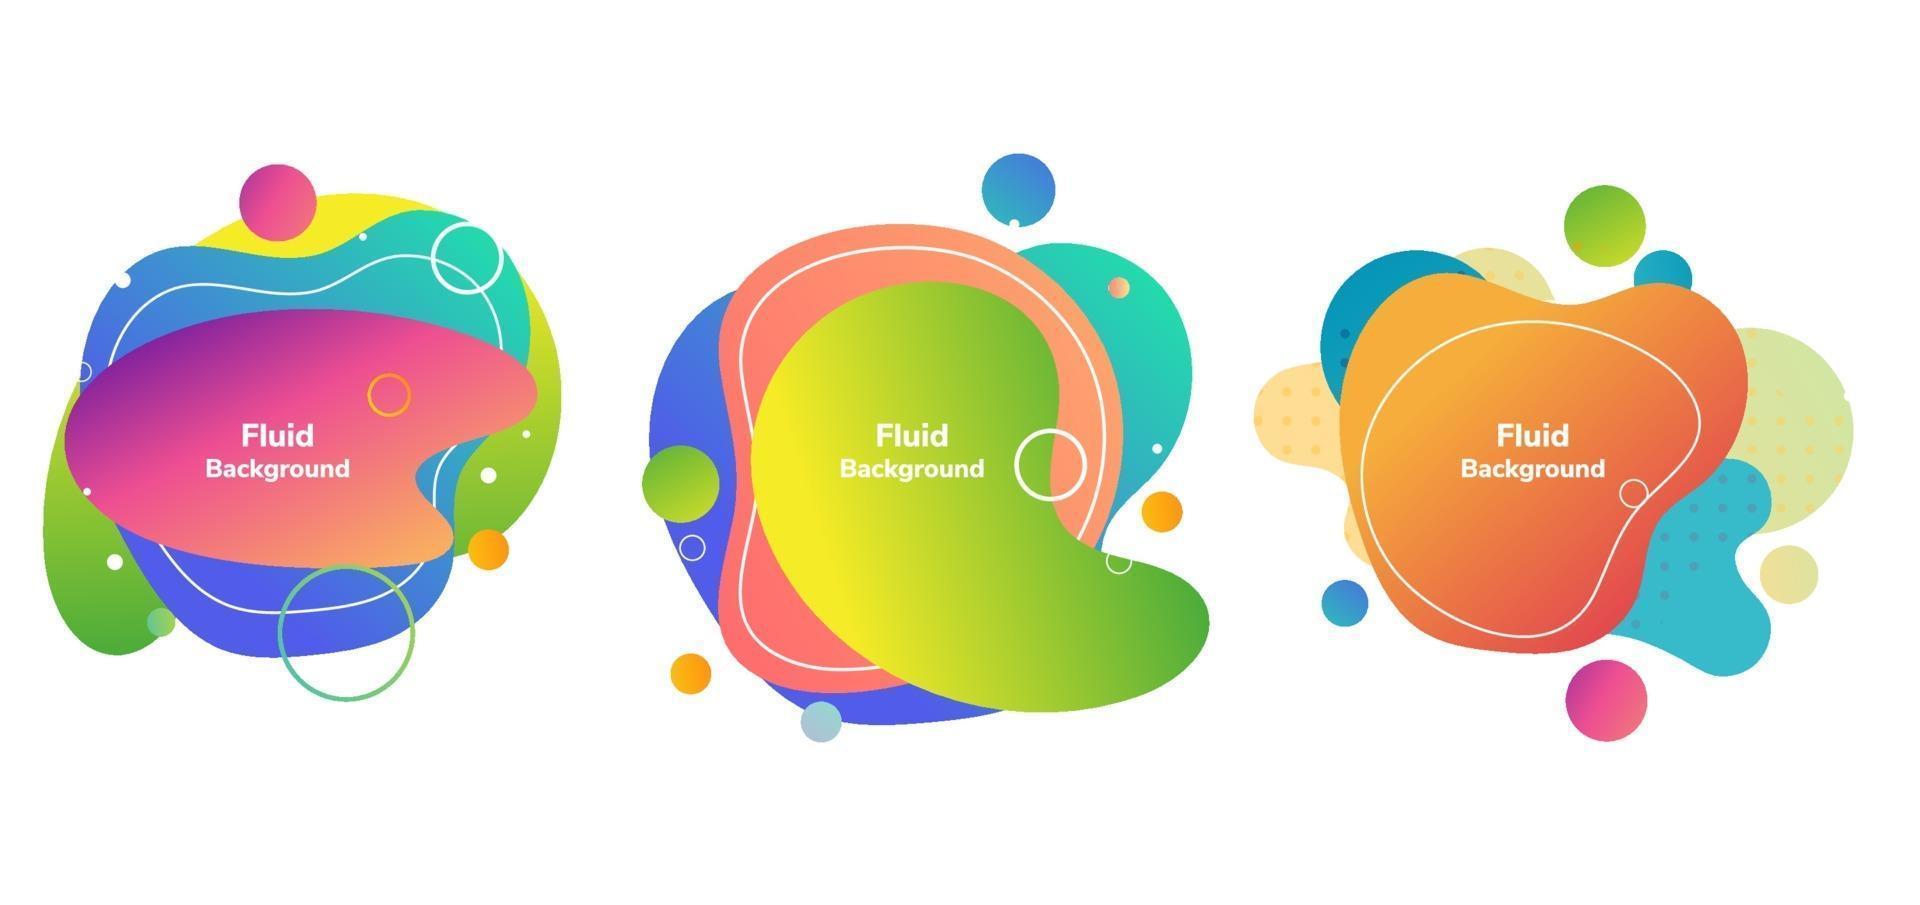 conjunto de fondo de banner de vector abstracto moderno. formas fluidas coloridas insignias elementos gráficos sobre fondo blanco.